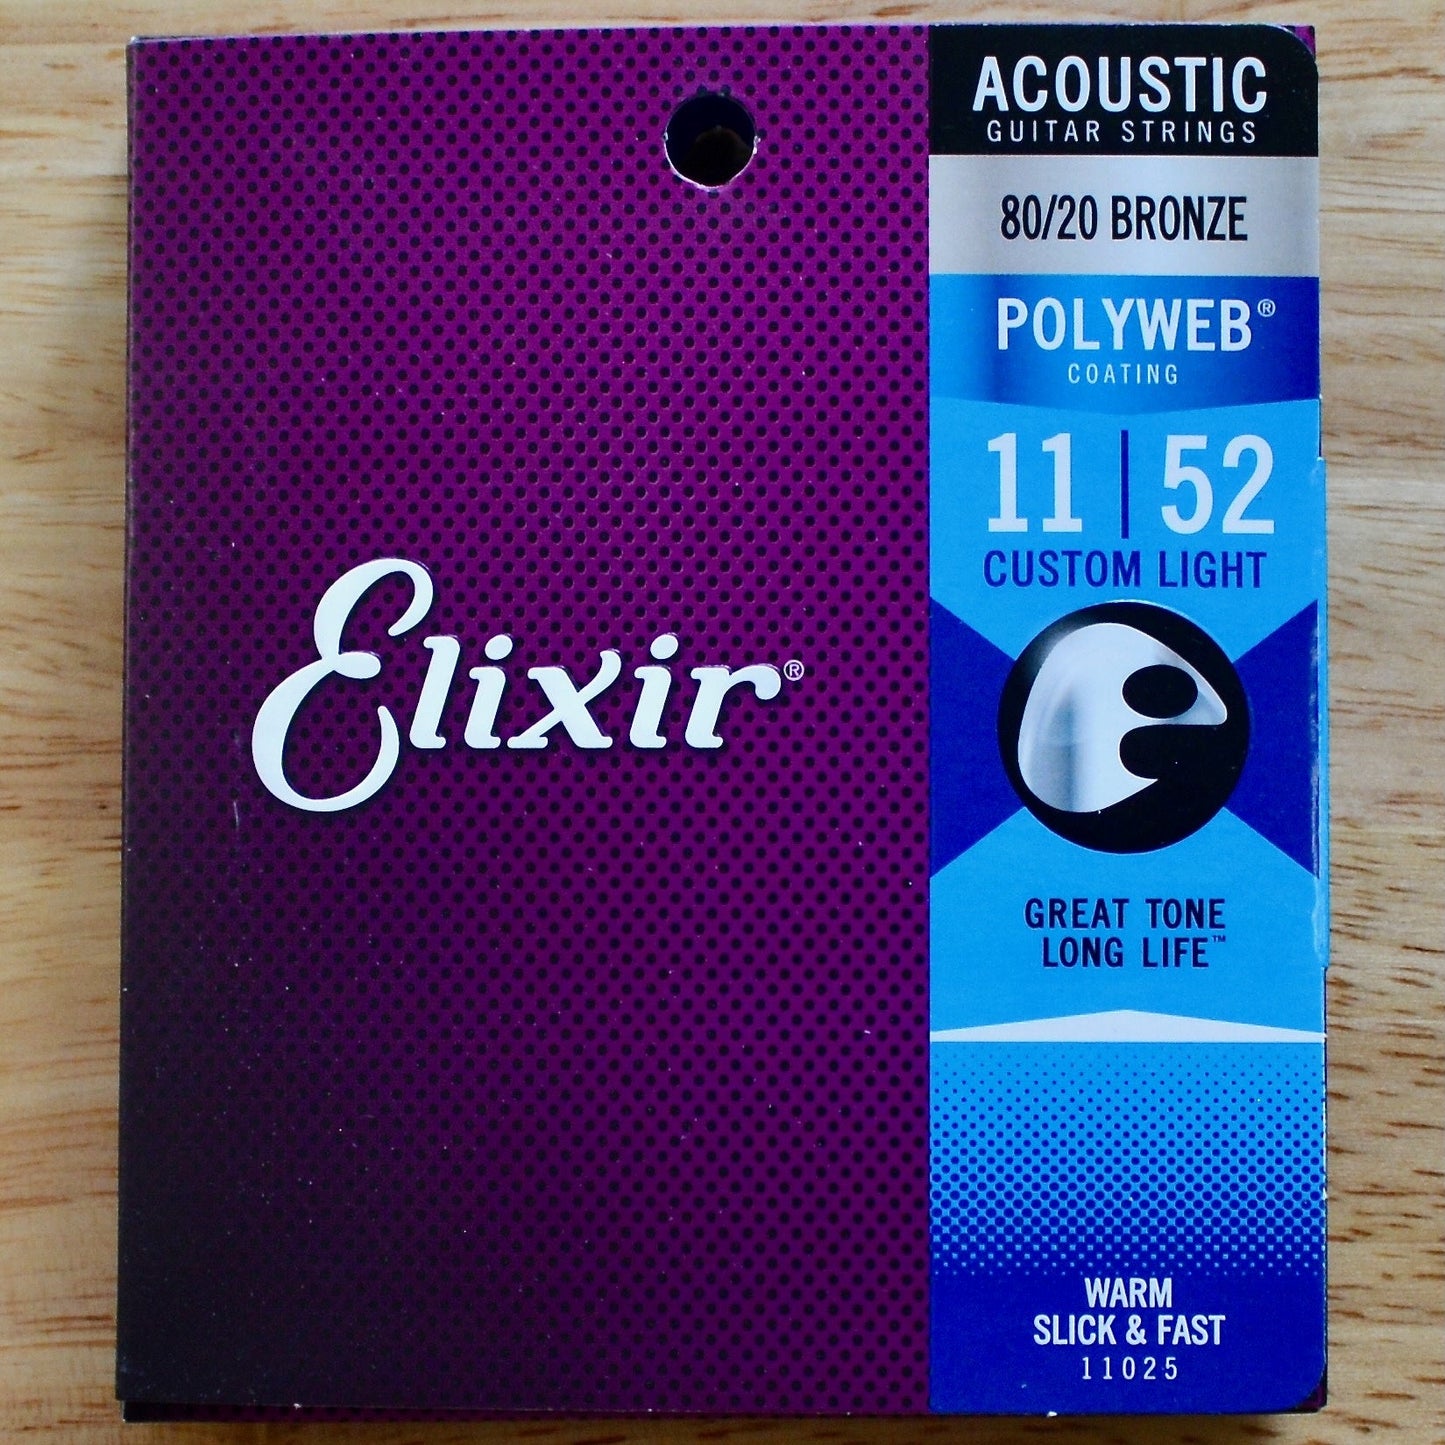 Elixir 80/20 Bronze Acoustic Strings Polyweb CoatingCustom Light